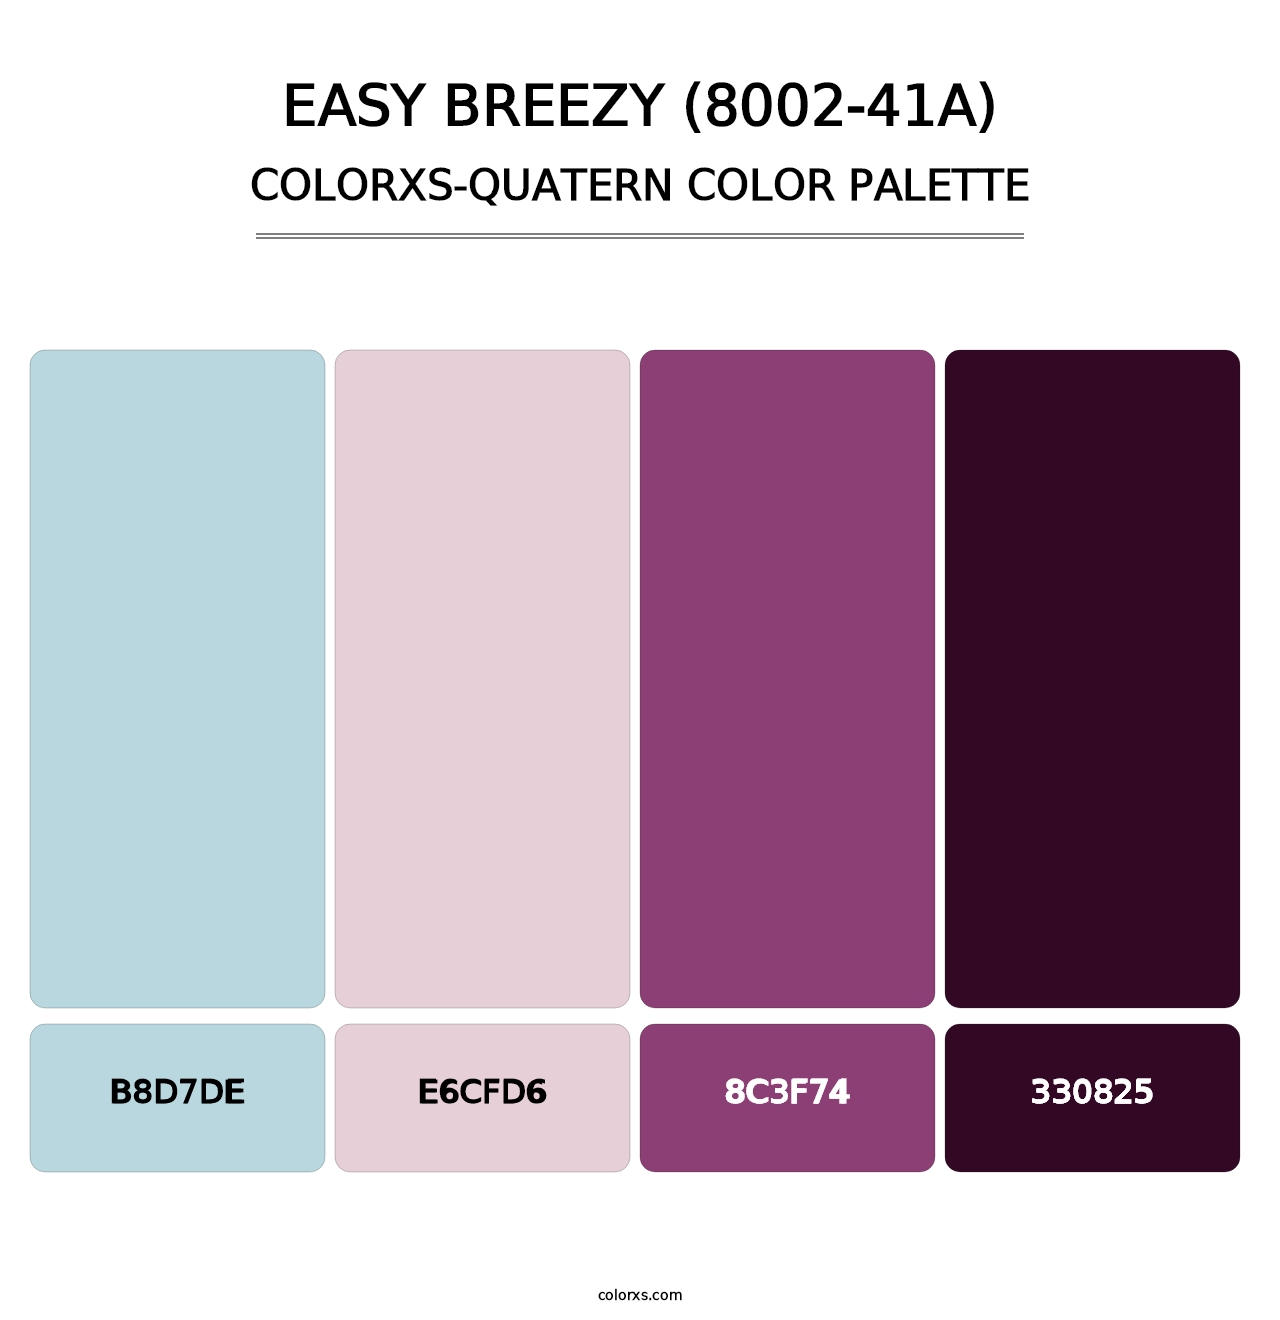 Easy Breezy (8002-41A) - Colorxs Quatern Palette